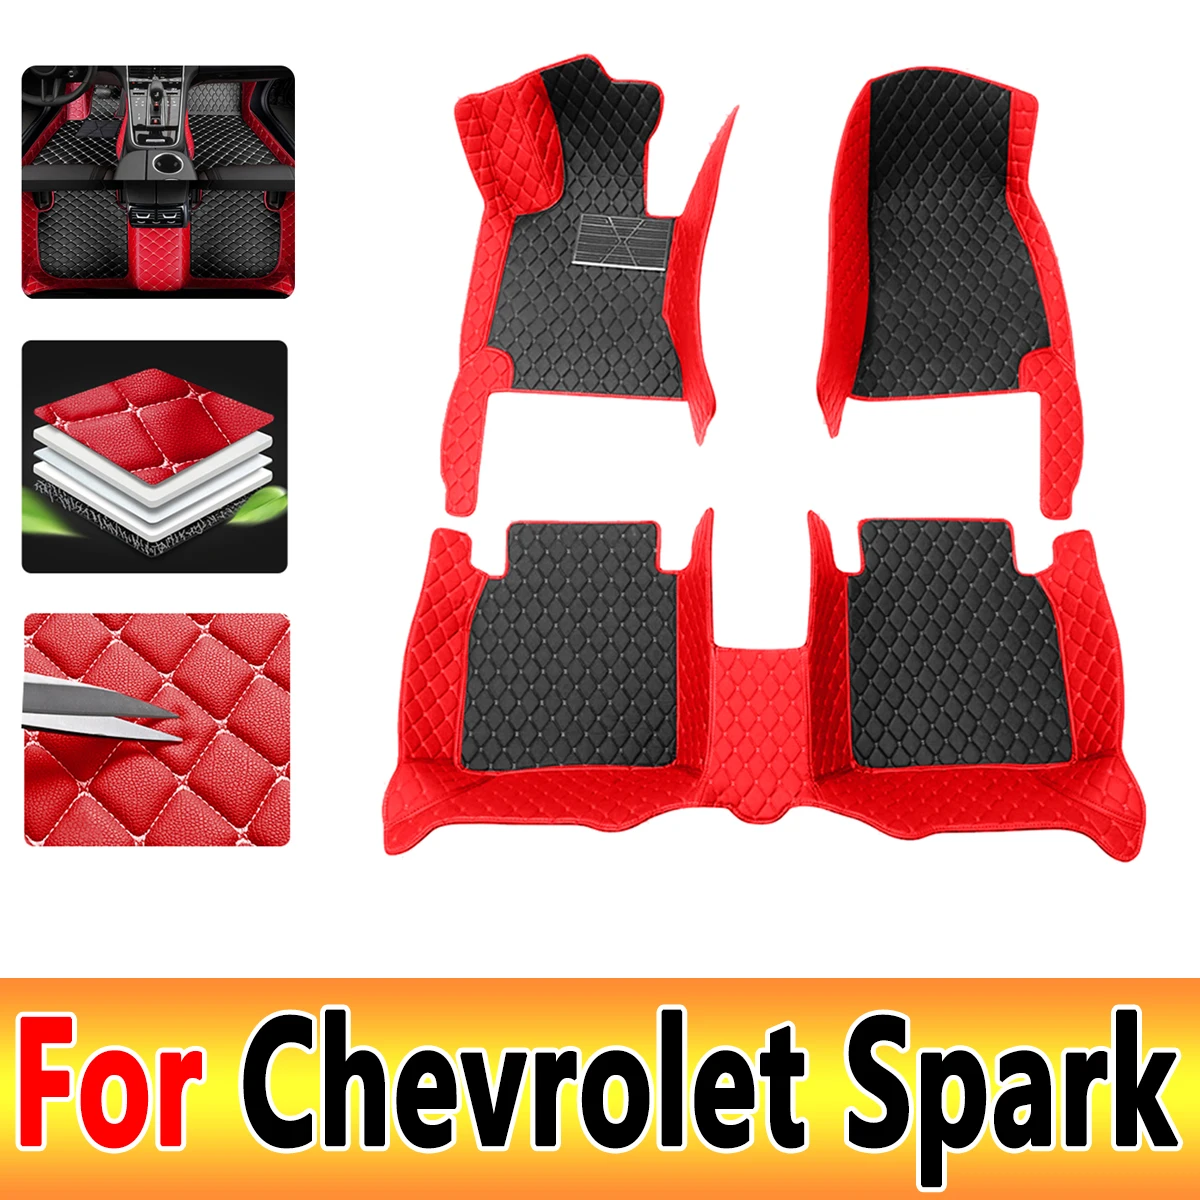 

Car Floor Mats For Chevrolet Holden Barina Spark EV Ravon R2 M300 2011~2015 Anti-dirt Pad Carpets Leather Mat Car Accessories